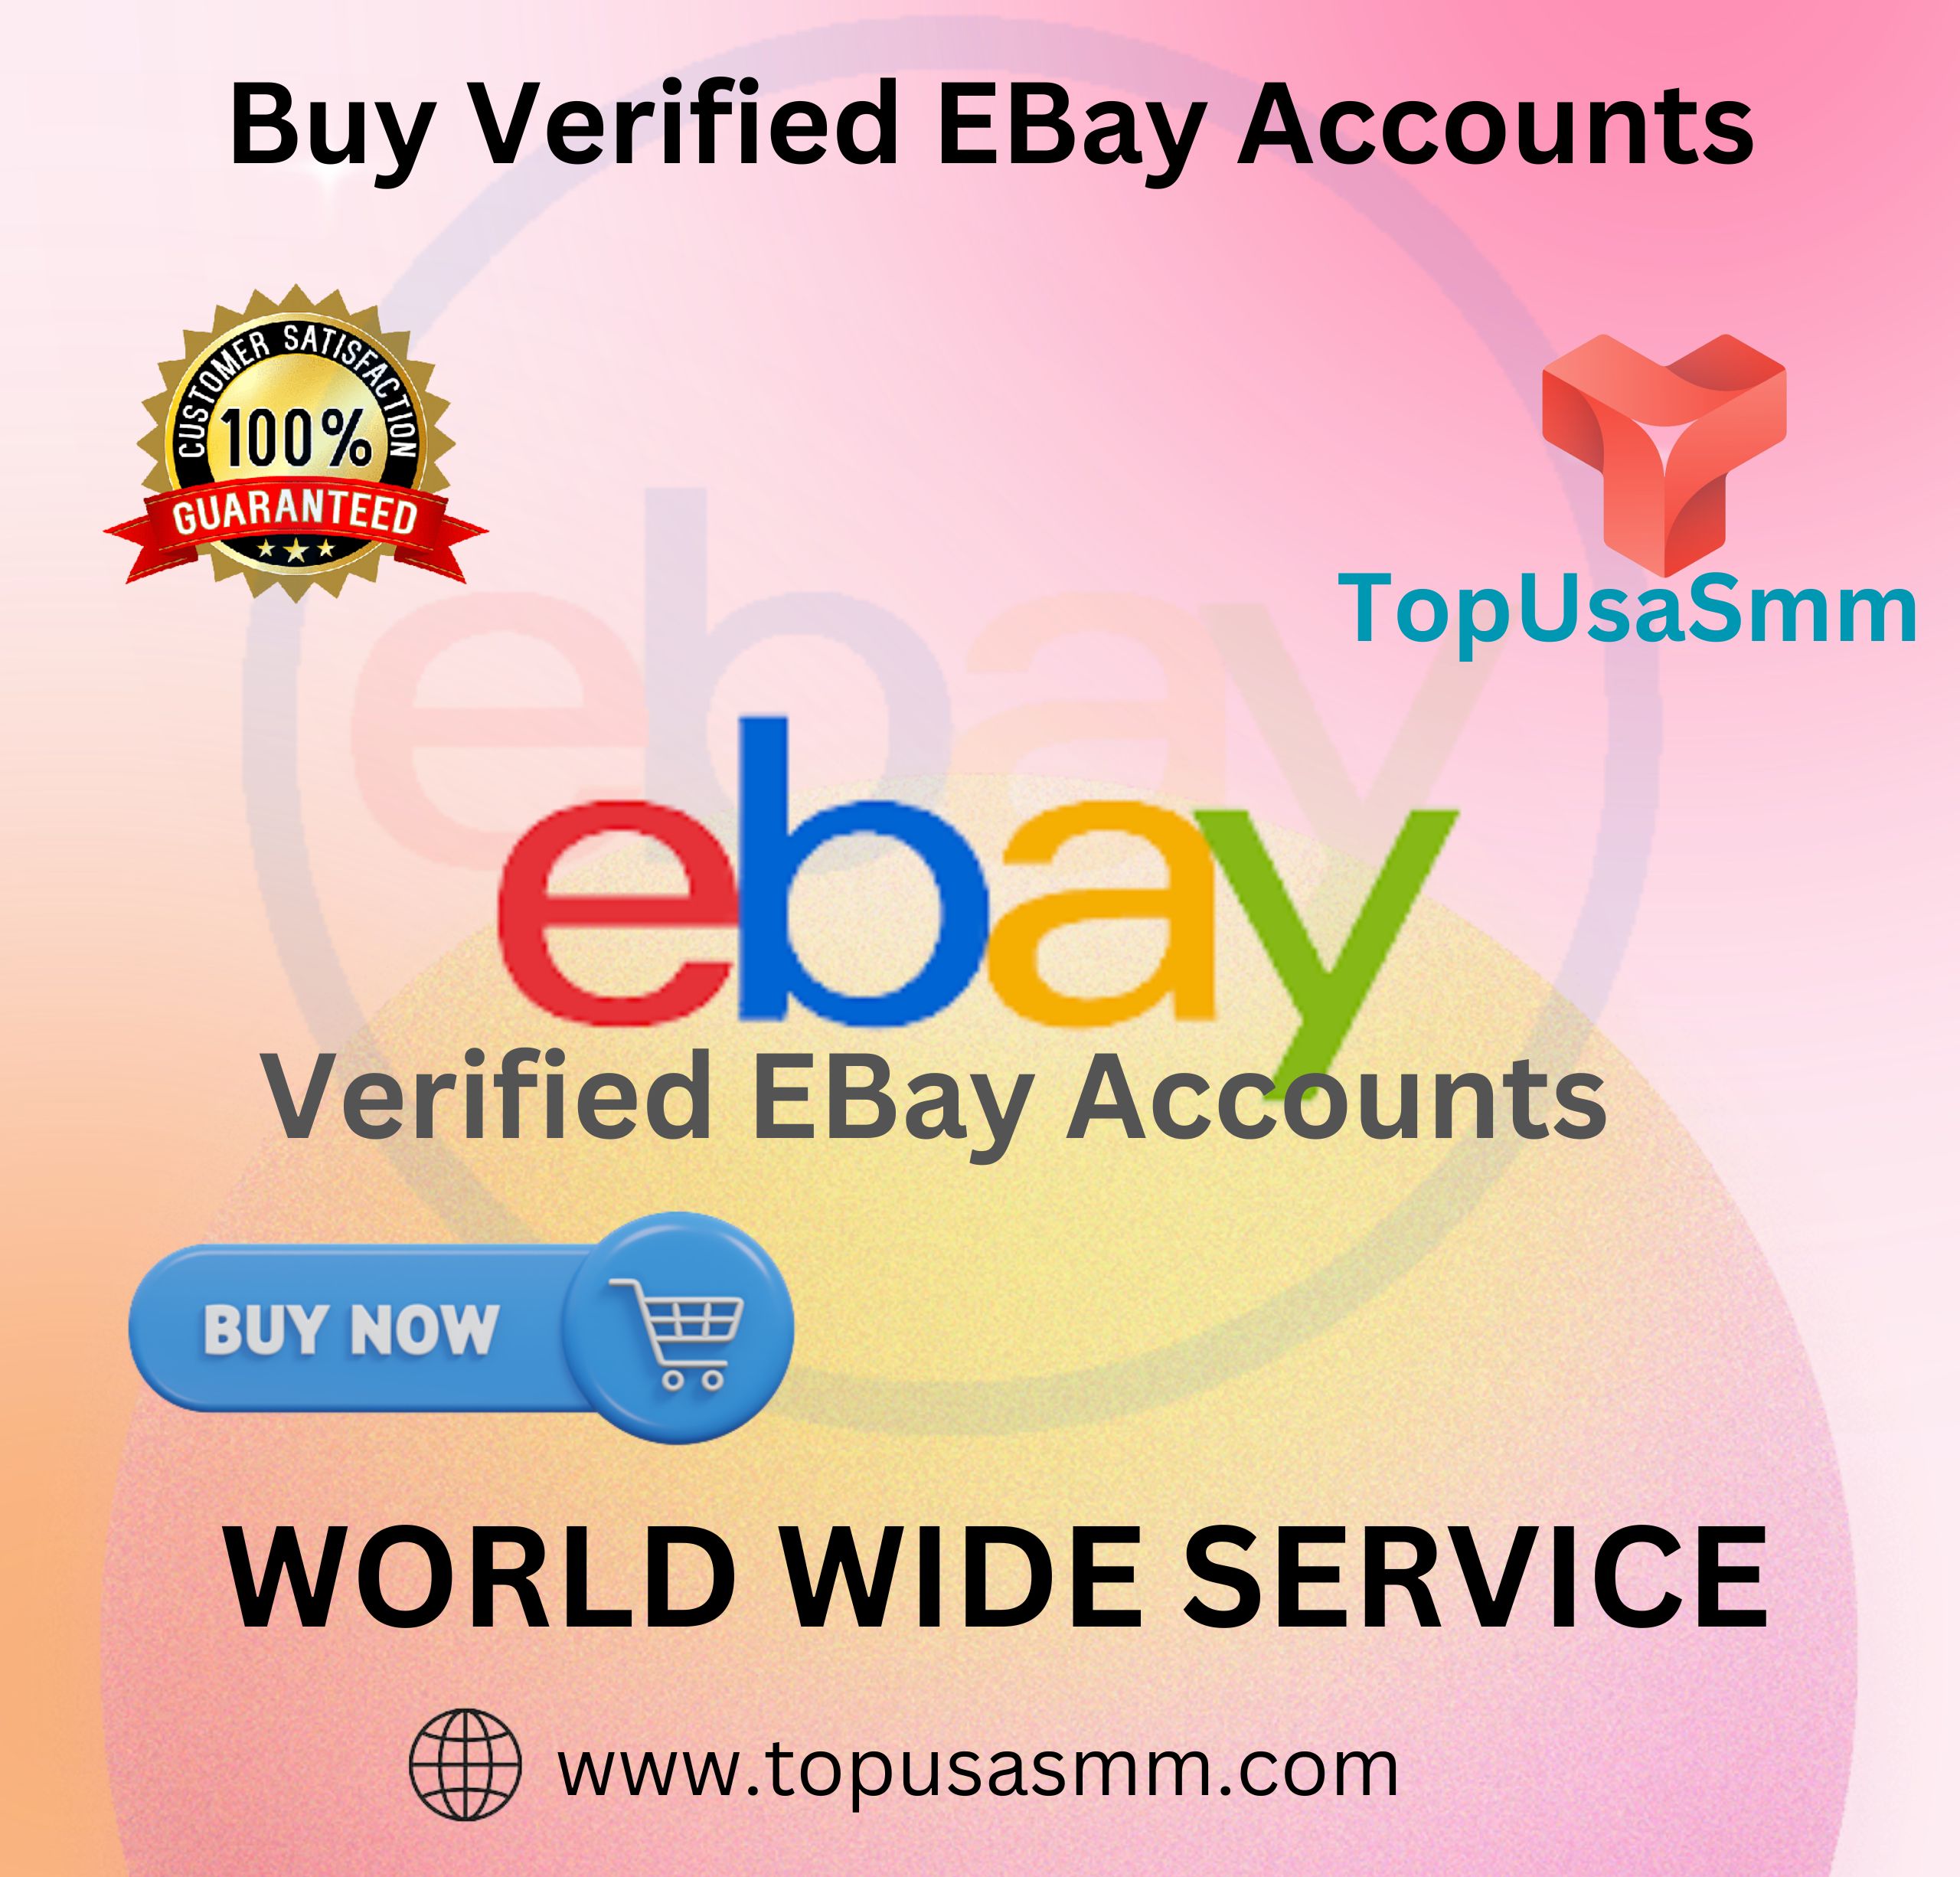 Buy Verified EBay Accounts - TopUsaSMM